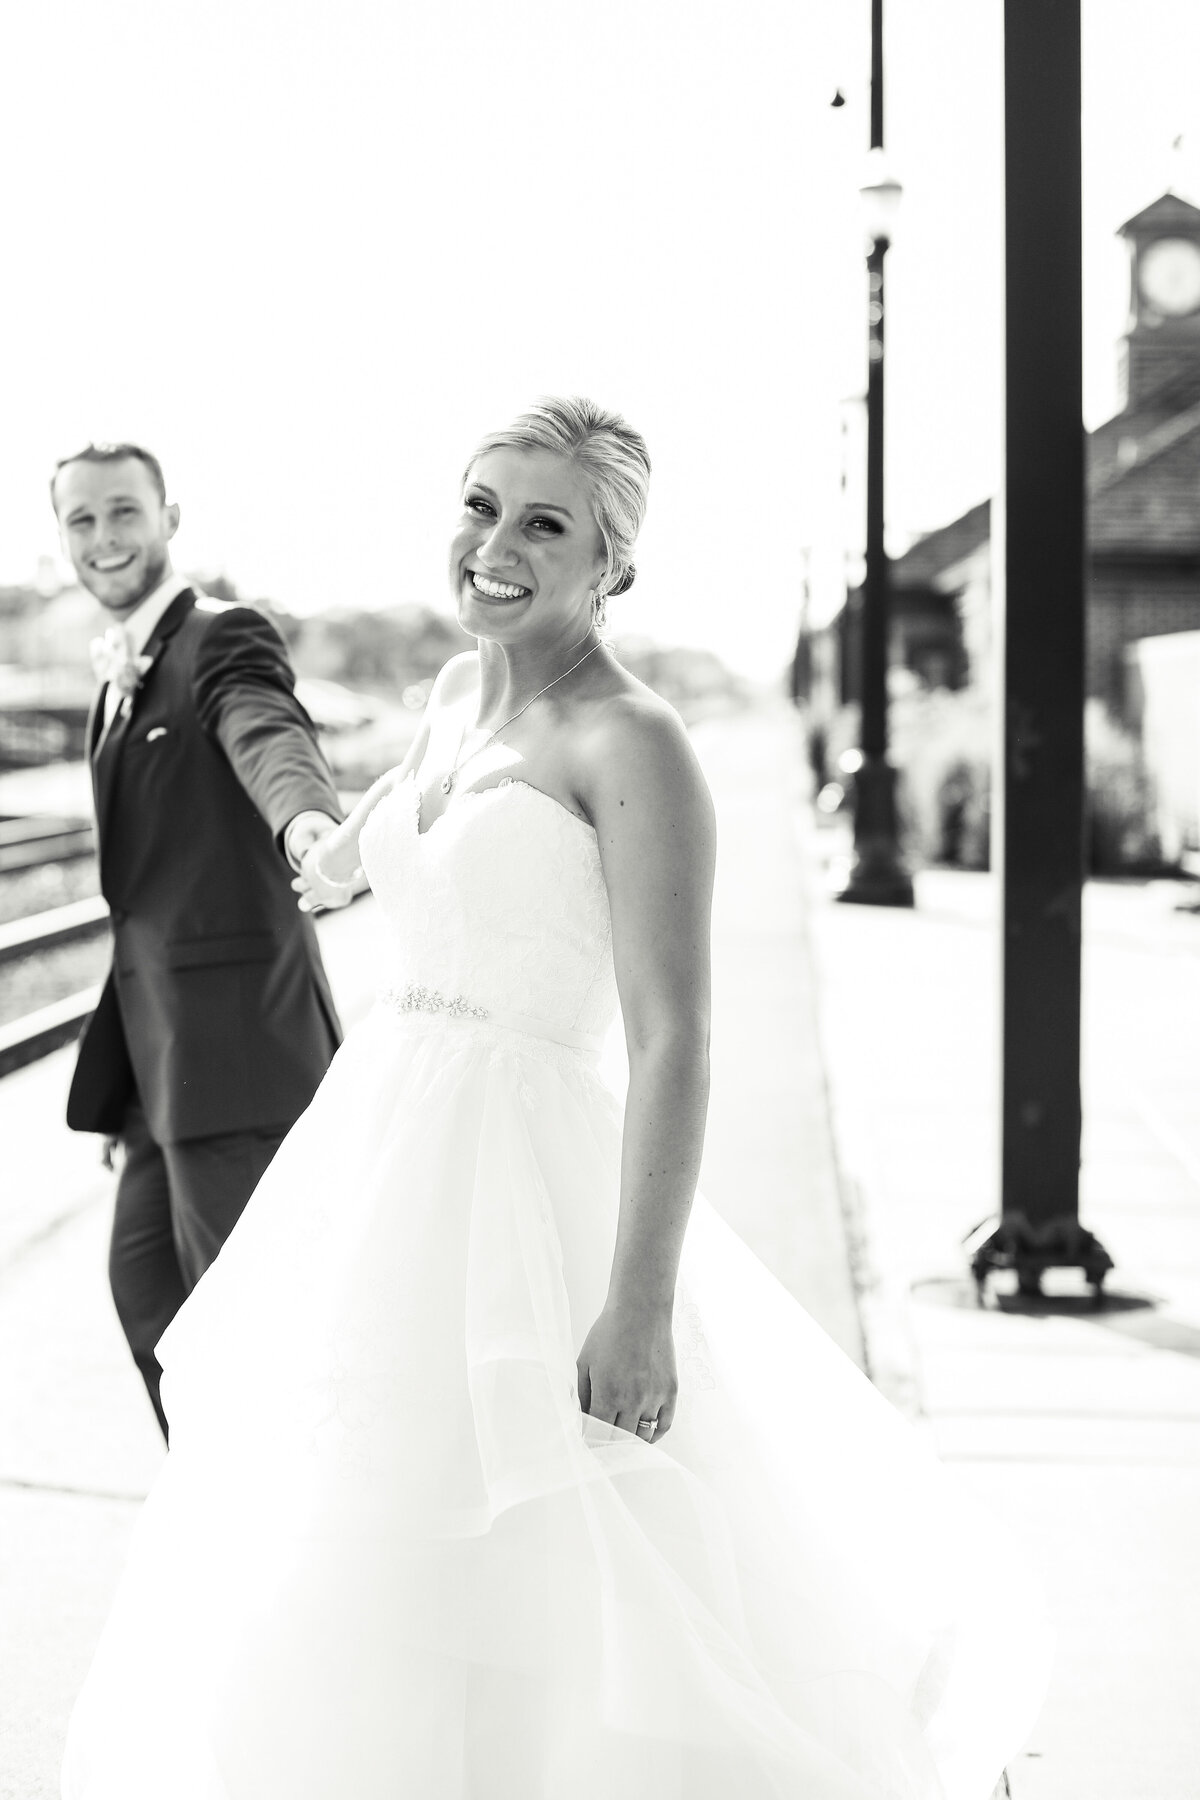 njeri-bishota-lauren-ashley-wedding-dress-bride-groom-train-station-black-and-white